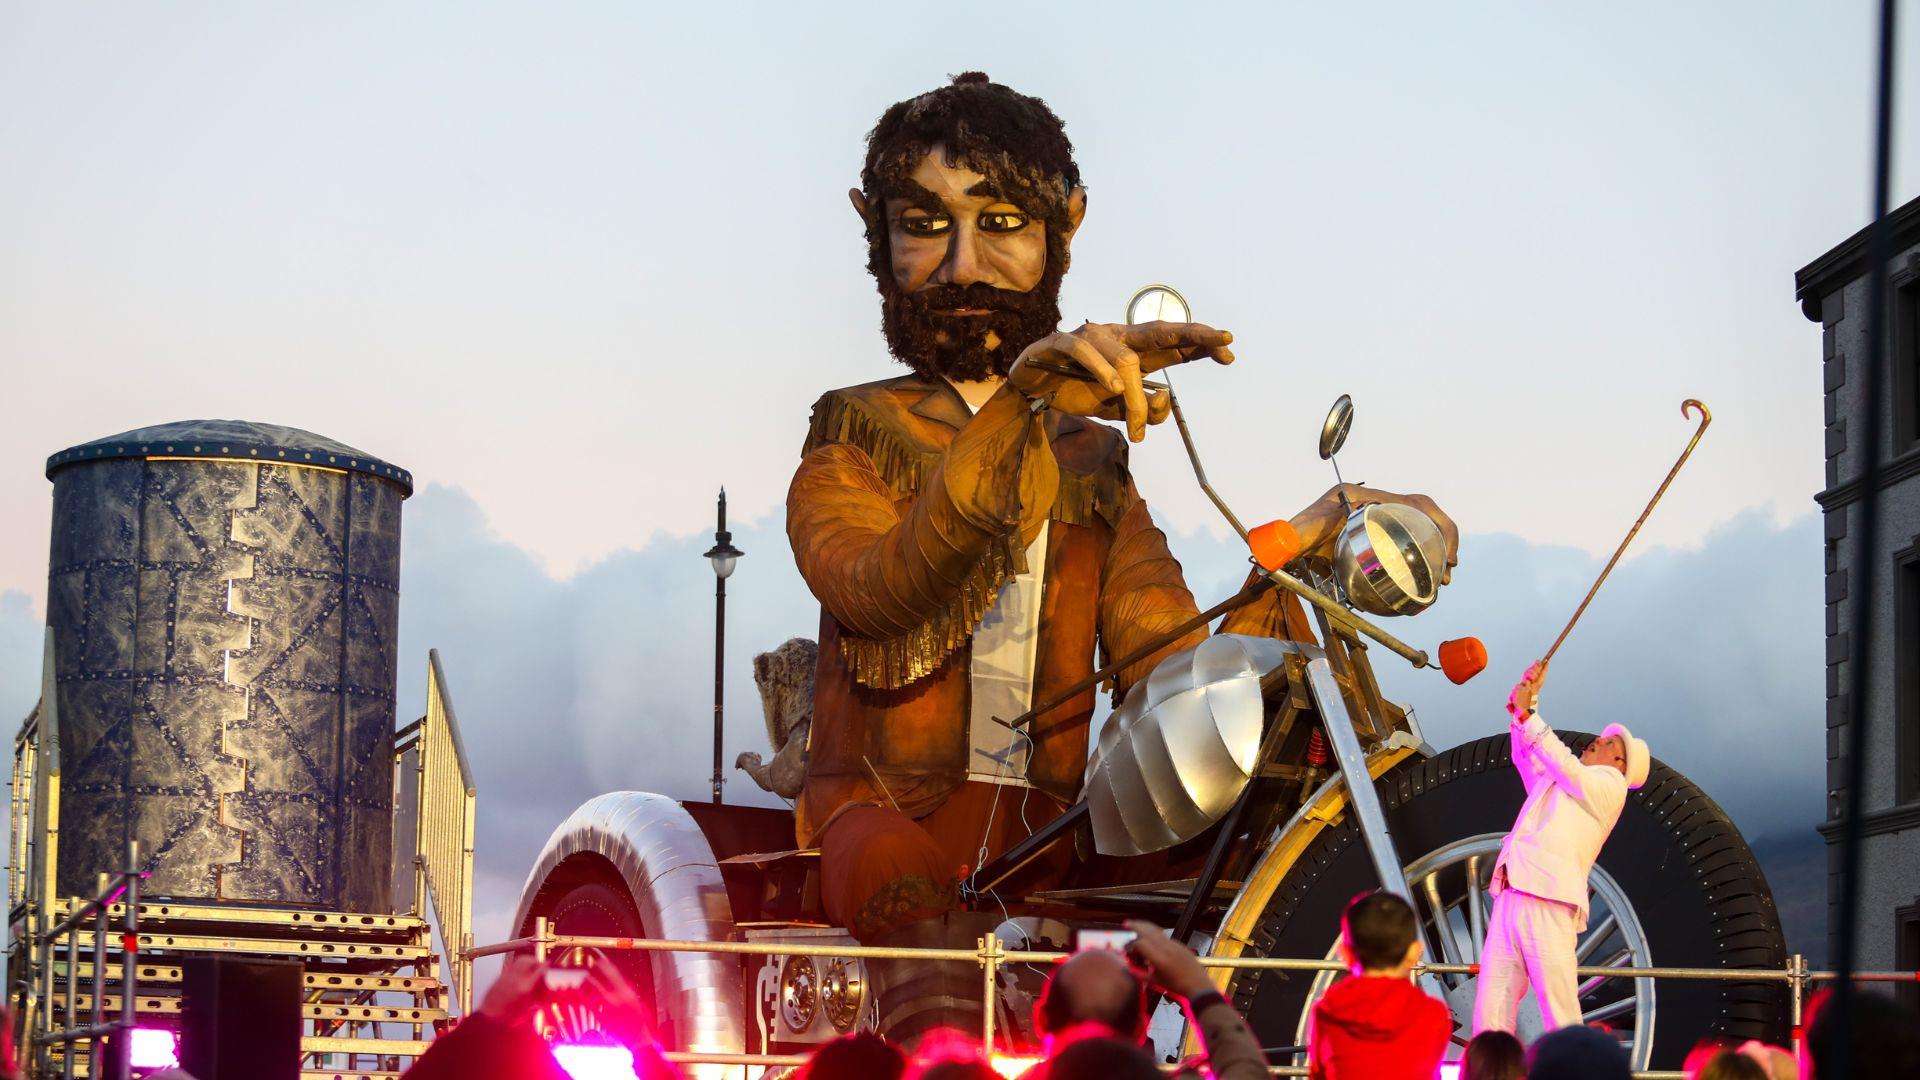 Wake the Giant Festival - Fionn Mac Comhaill on his motorbike